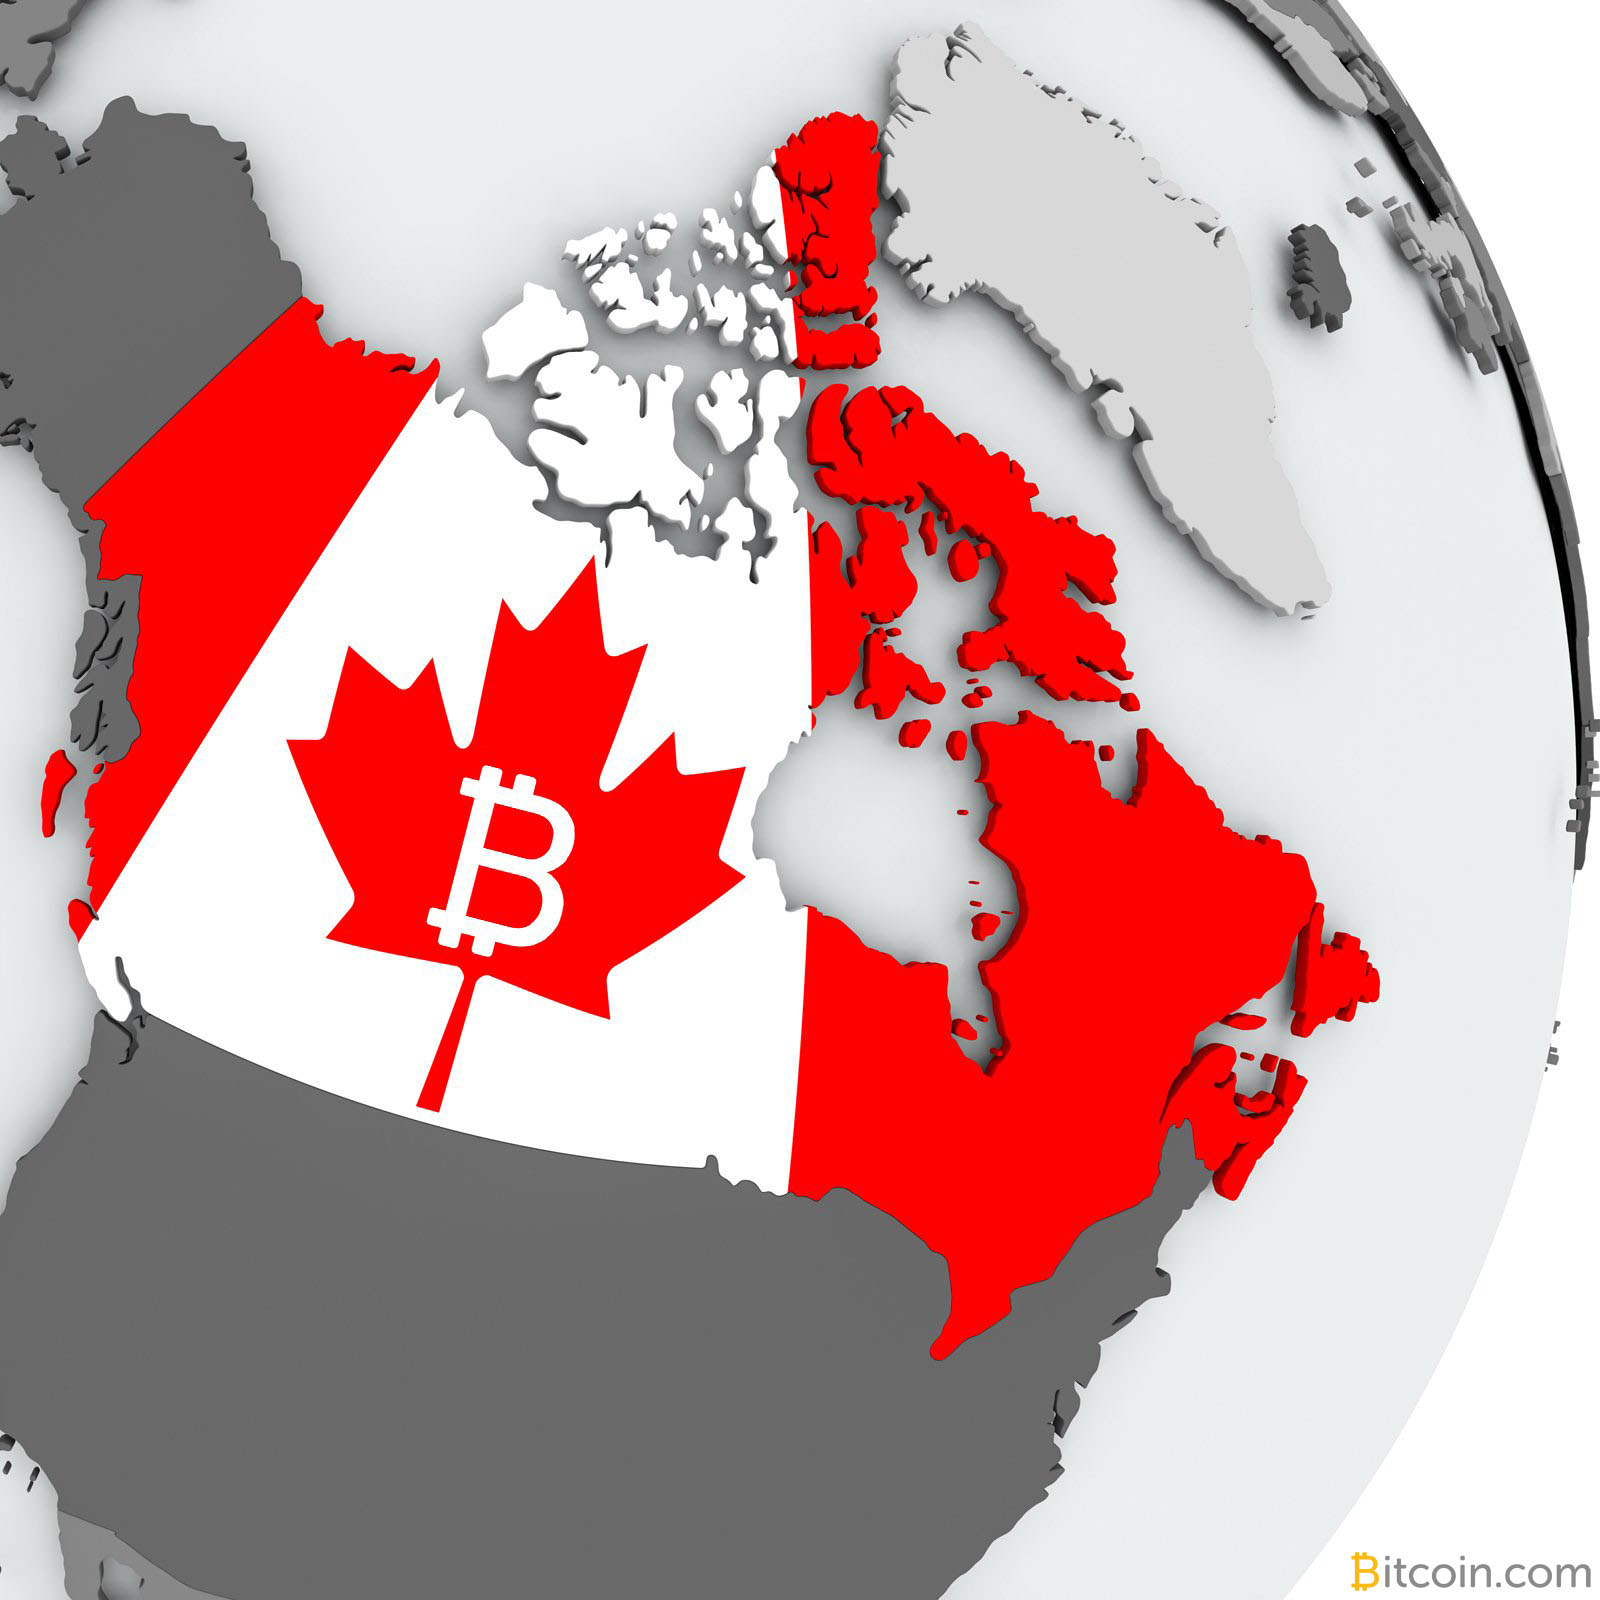 Major BTC Mining Facility Now Operating In Canada